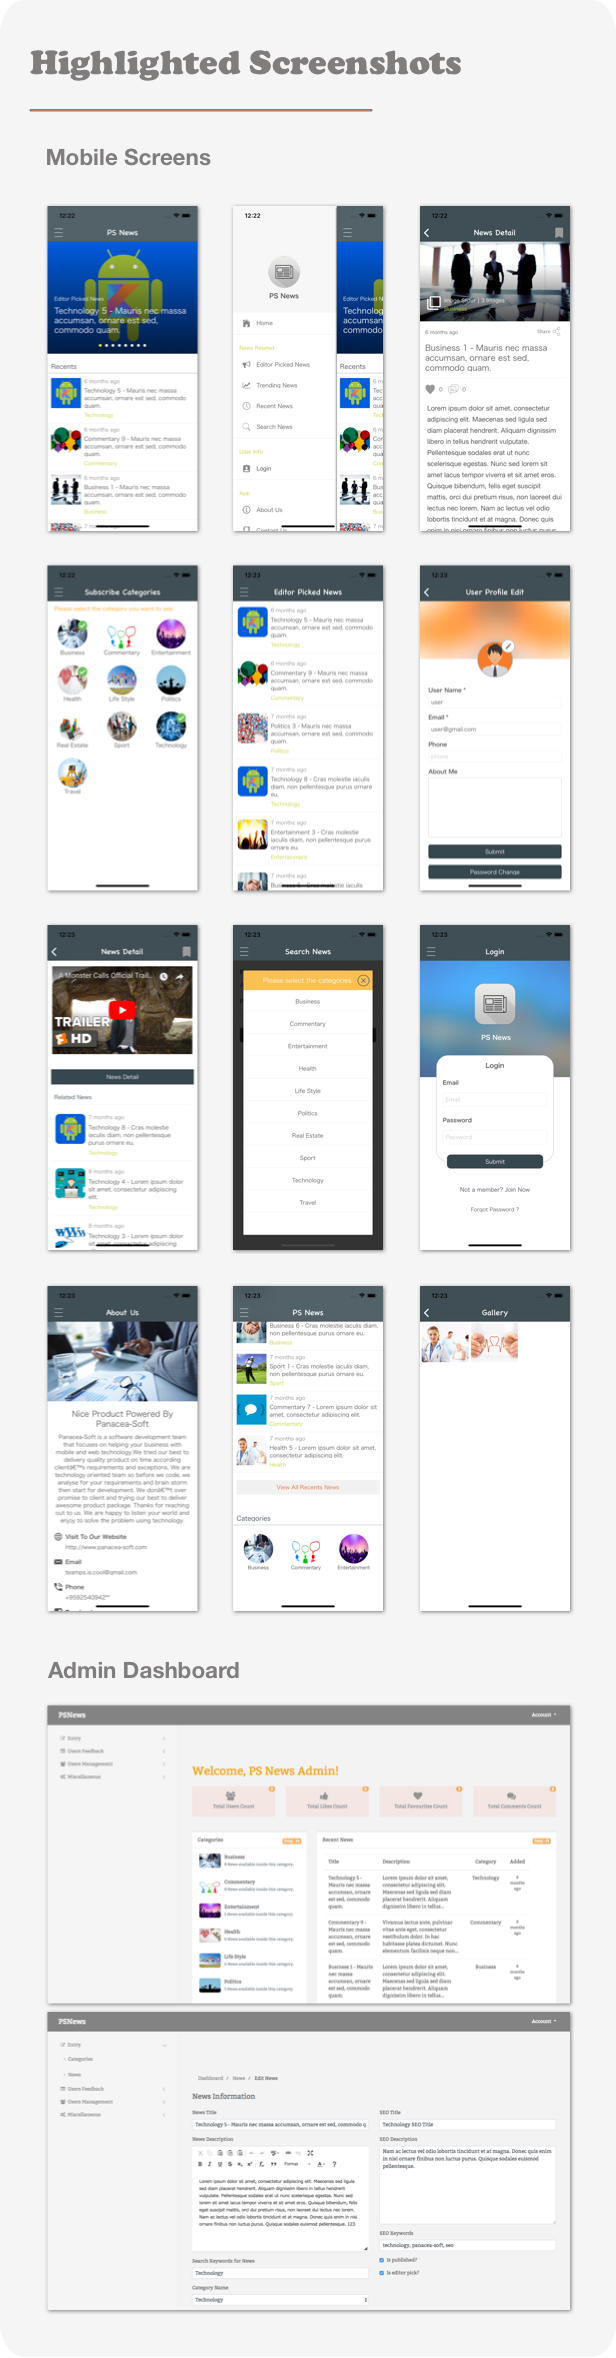 News App (Multipurpose iOS News Application) 1.6 - 8